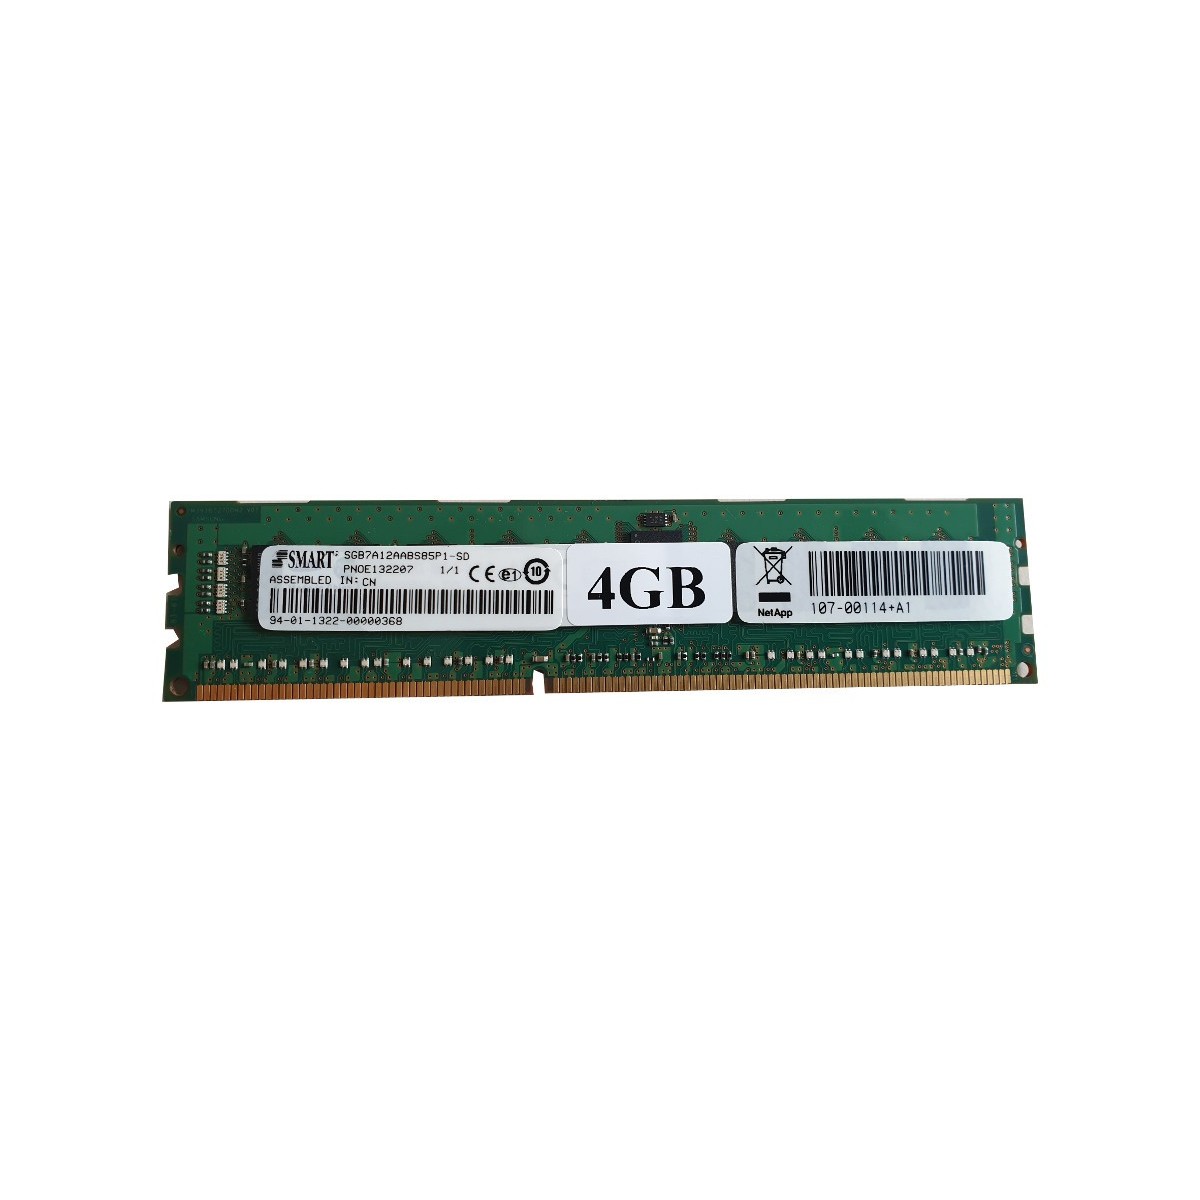 NETApp 4GB DDR3 PC3L-8500R ECC RDIMM 107-00114+A1